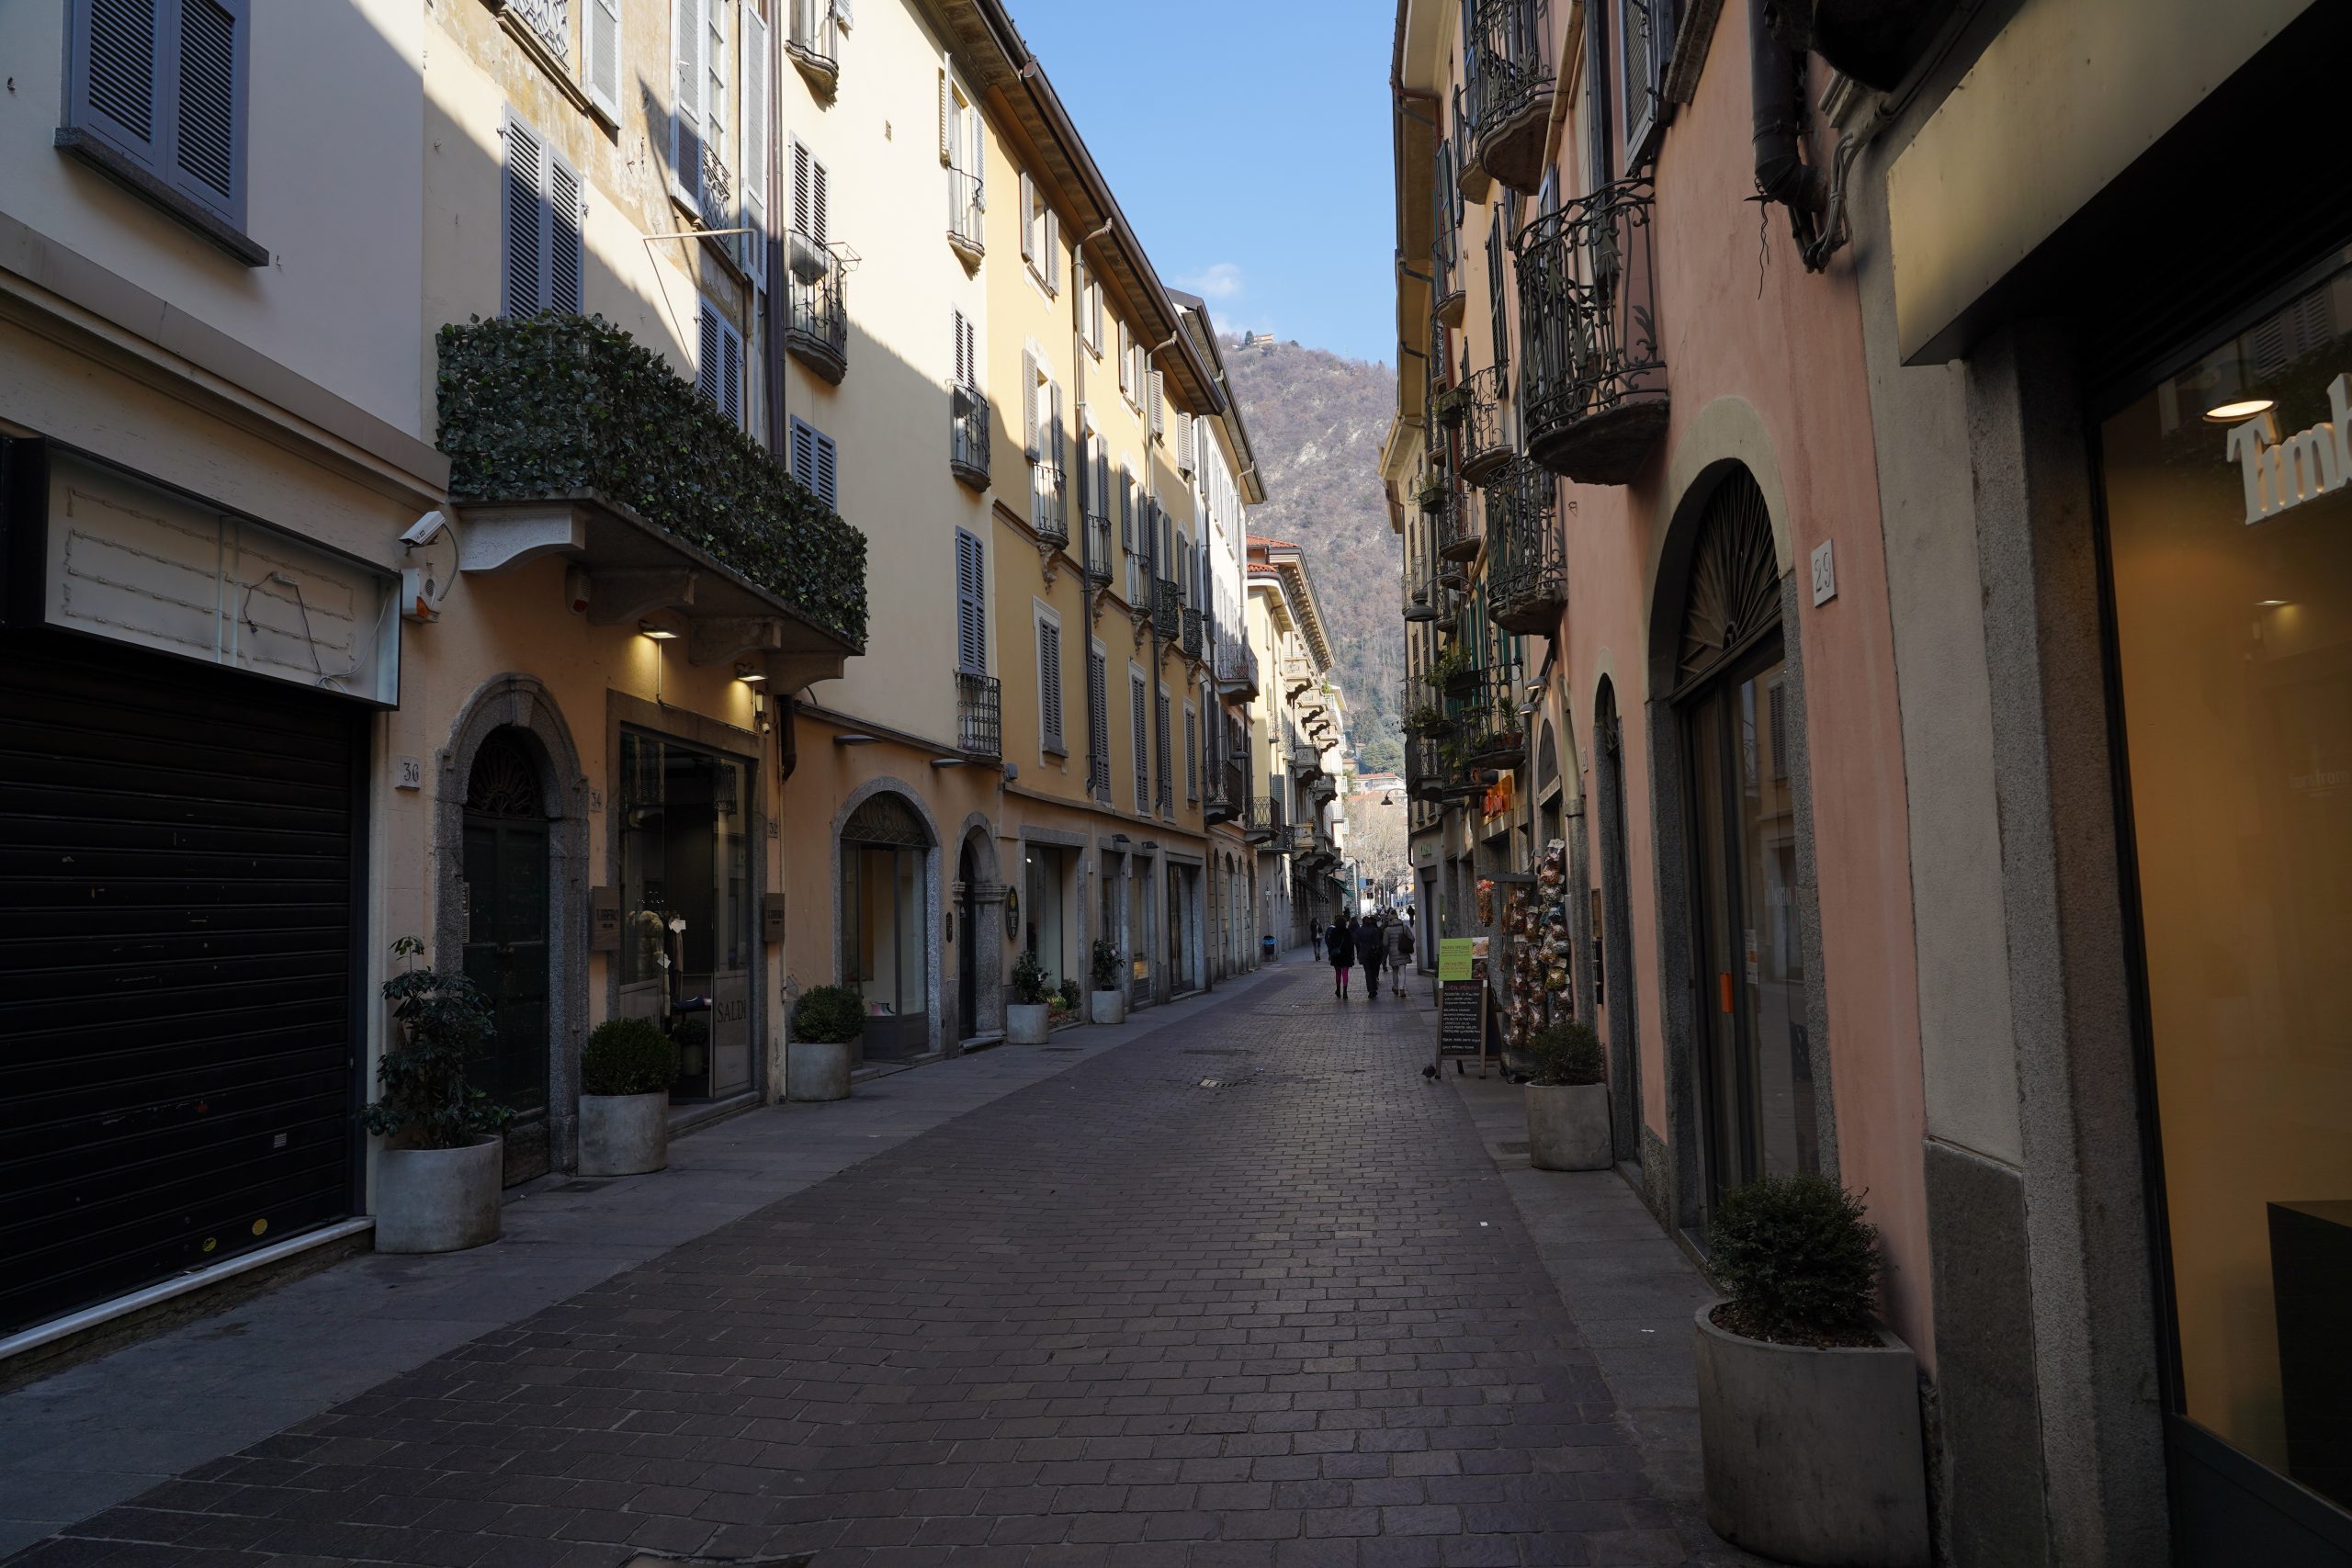 The narrow streets of Lake Como